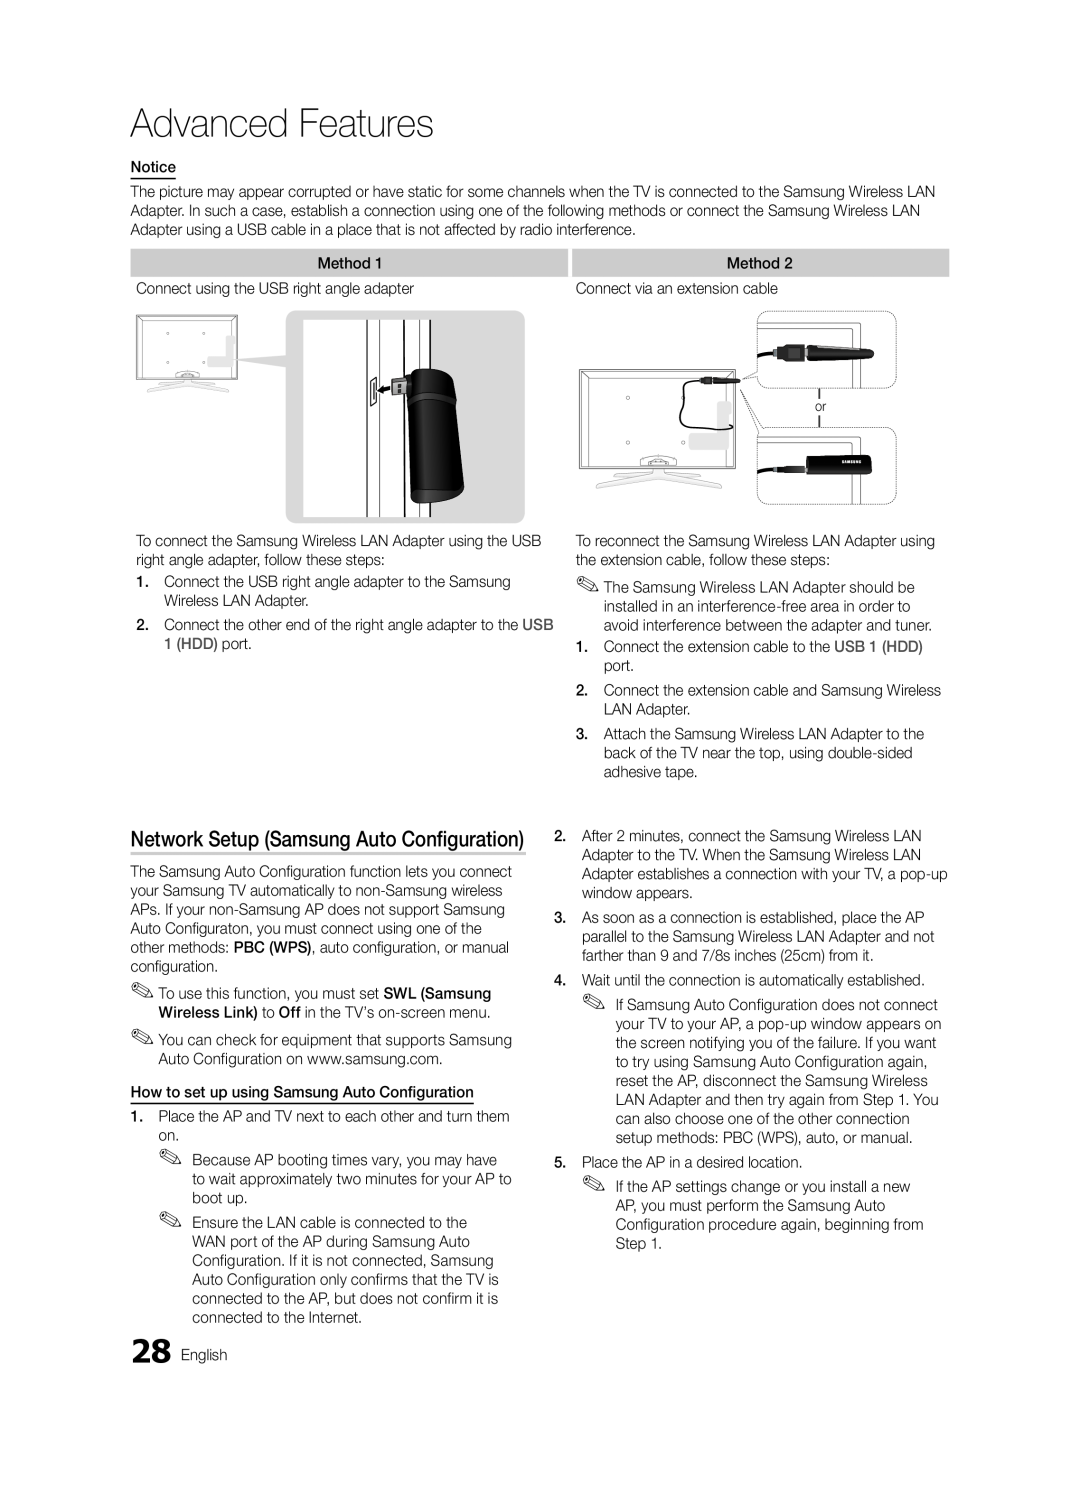 Samsung 6800 user manual Network Setup Samsung Auto Configuration, Advanced Features 